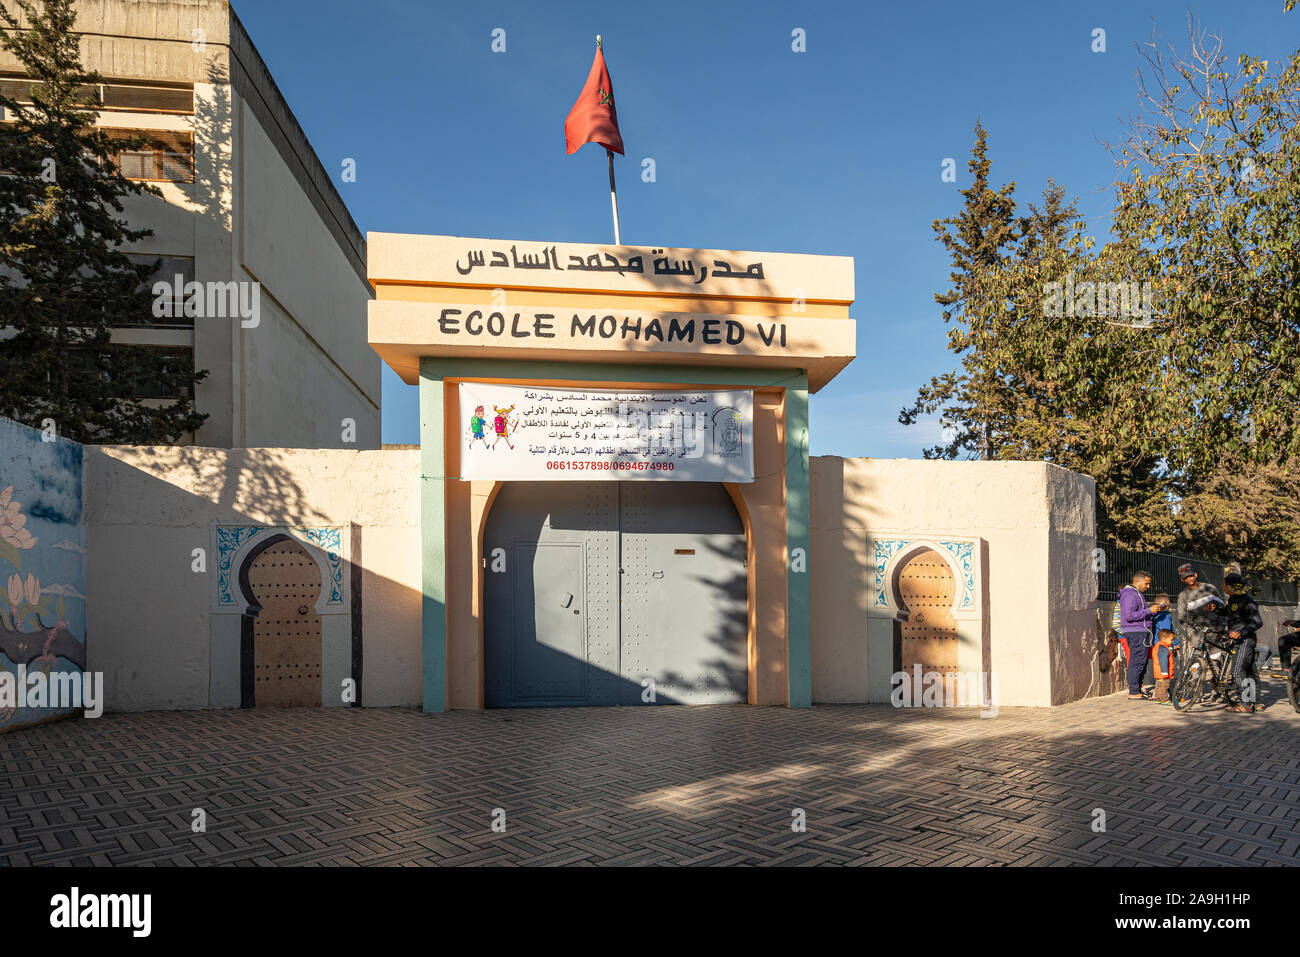 Fez, Morocco. November 9, 2019.  the entrance gate of the Mohamed VI school Stock Photo